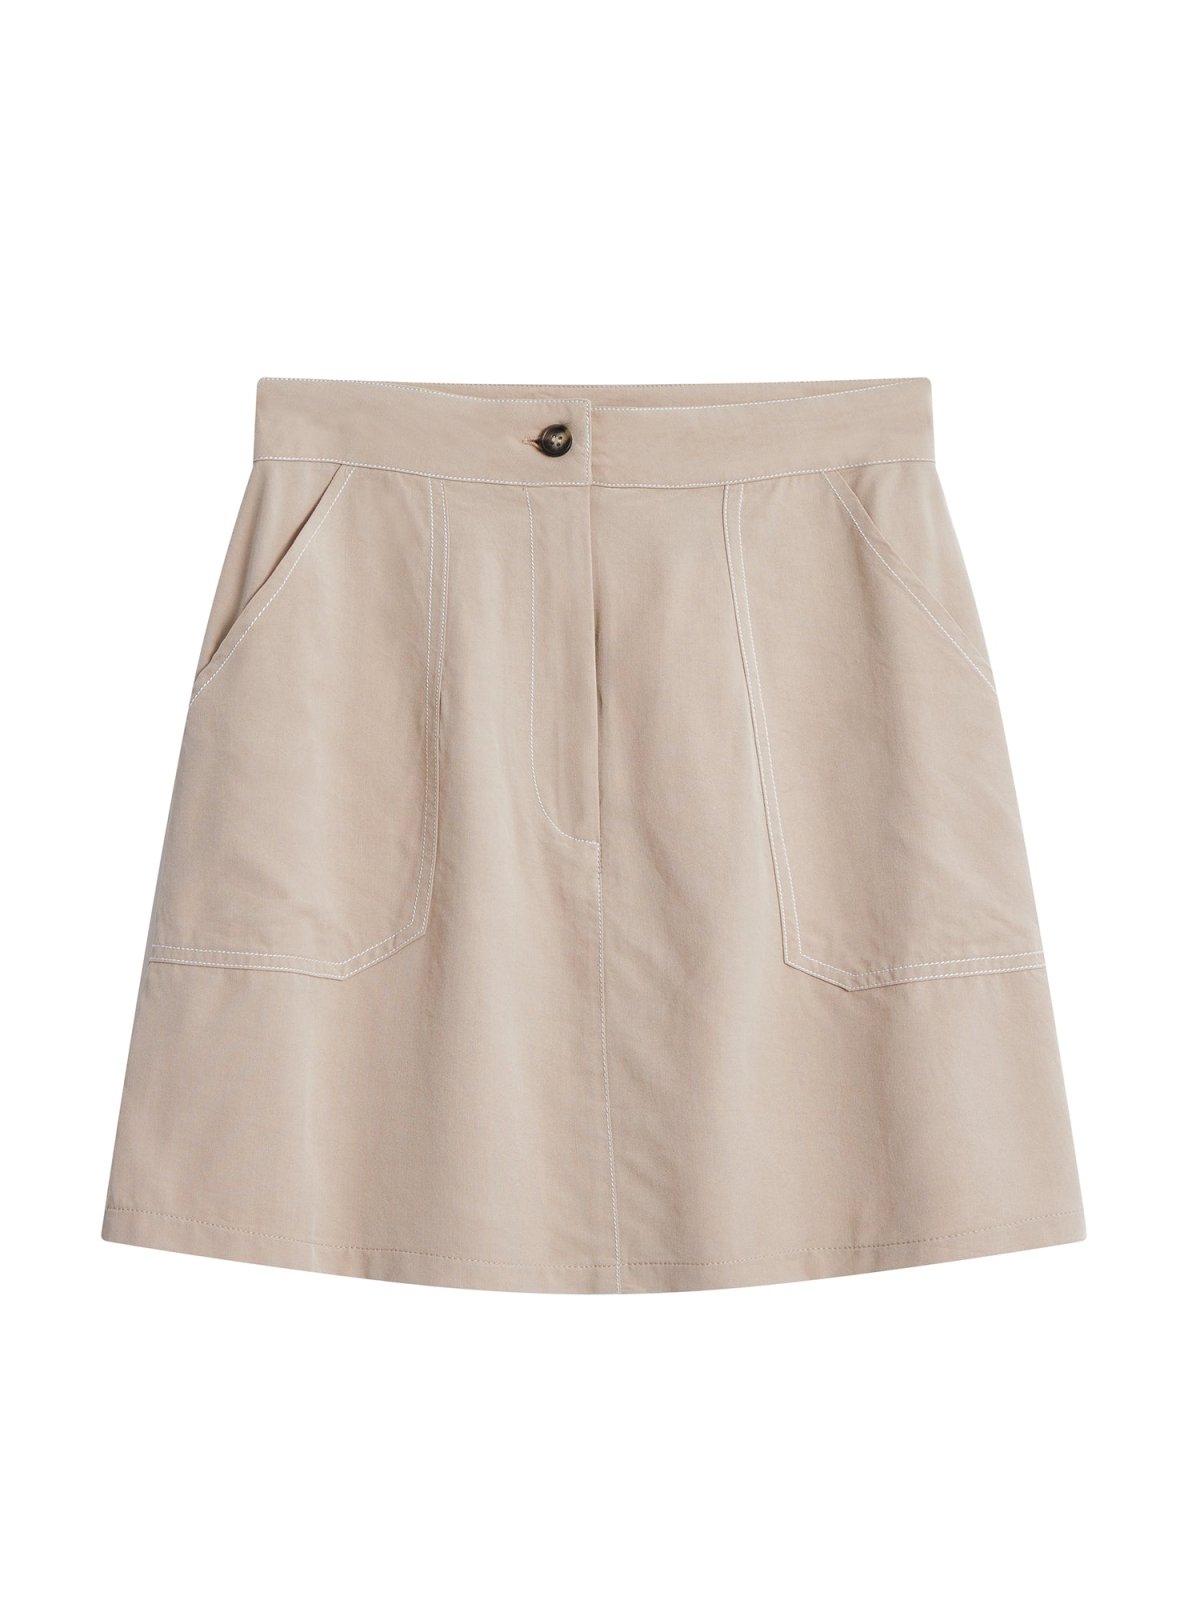 Patch Pocket Skirt ALMOND - DAG-DD8660-21AlmondS - Beige - S - D'ZAGE Designs